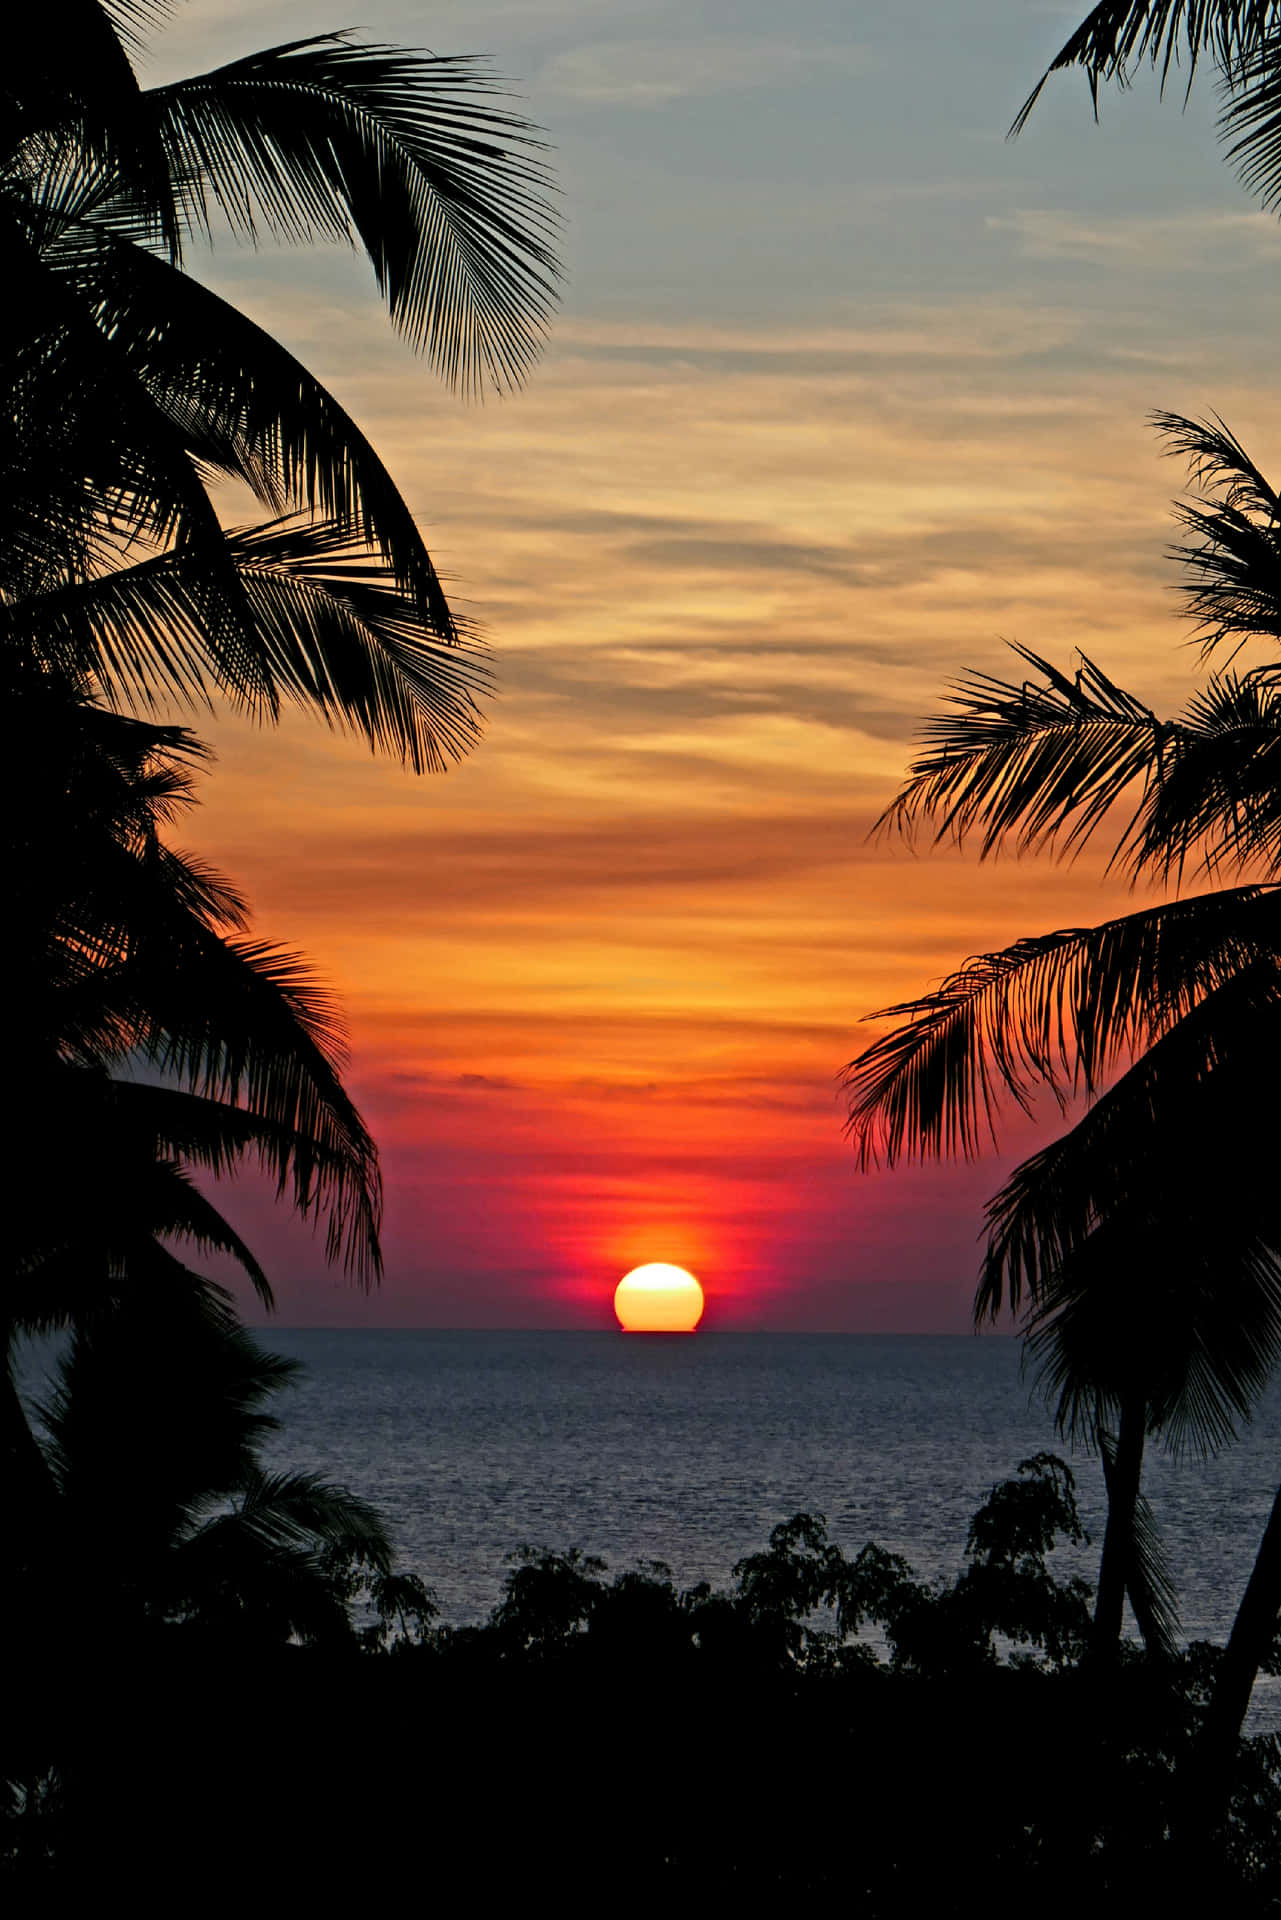 Enjoy the tranquil beauty of a beach sunset.